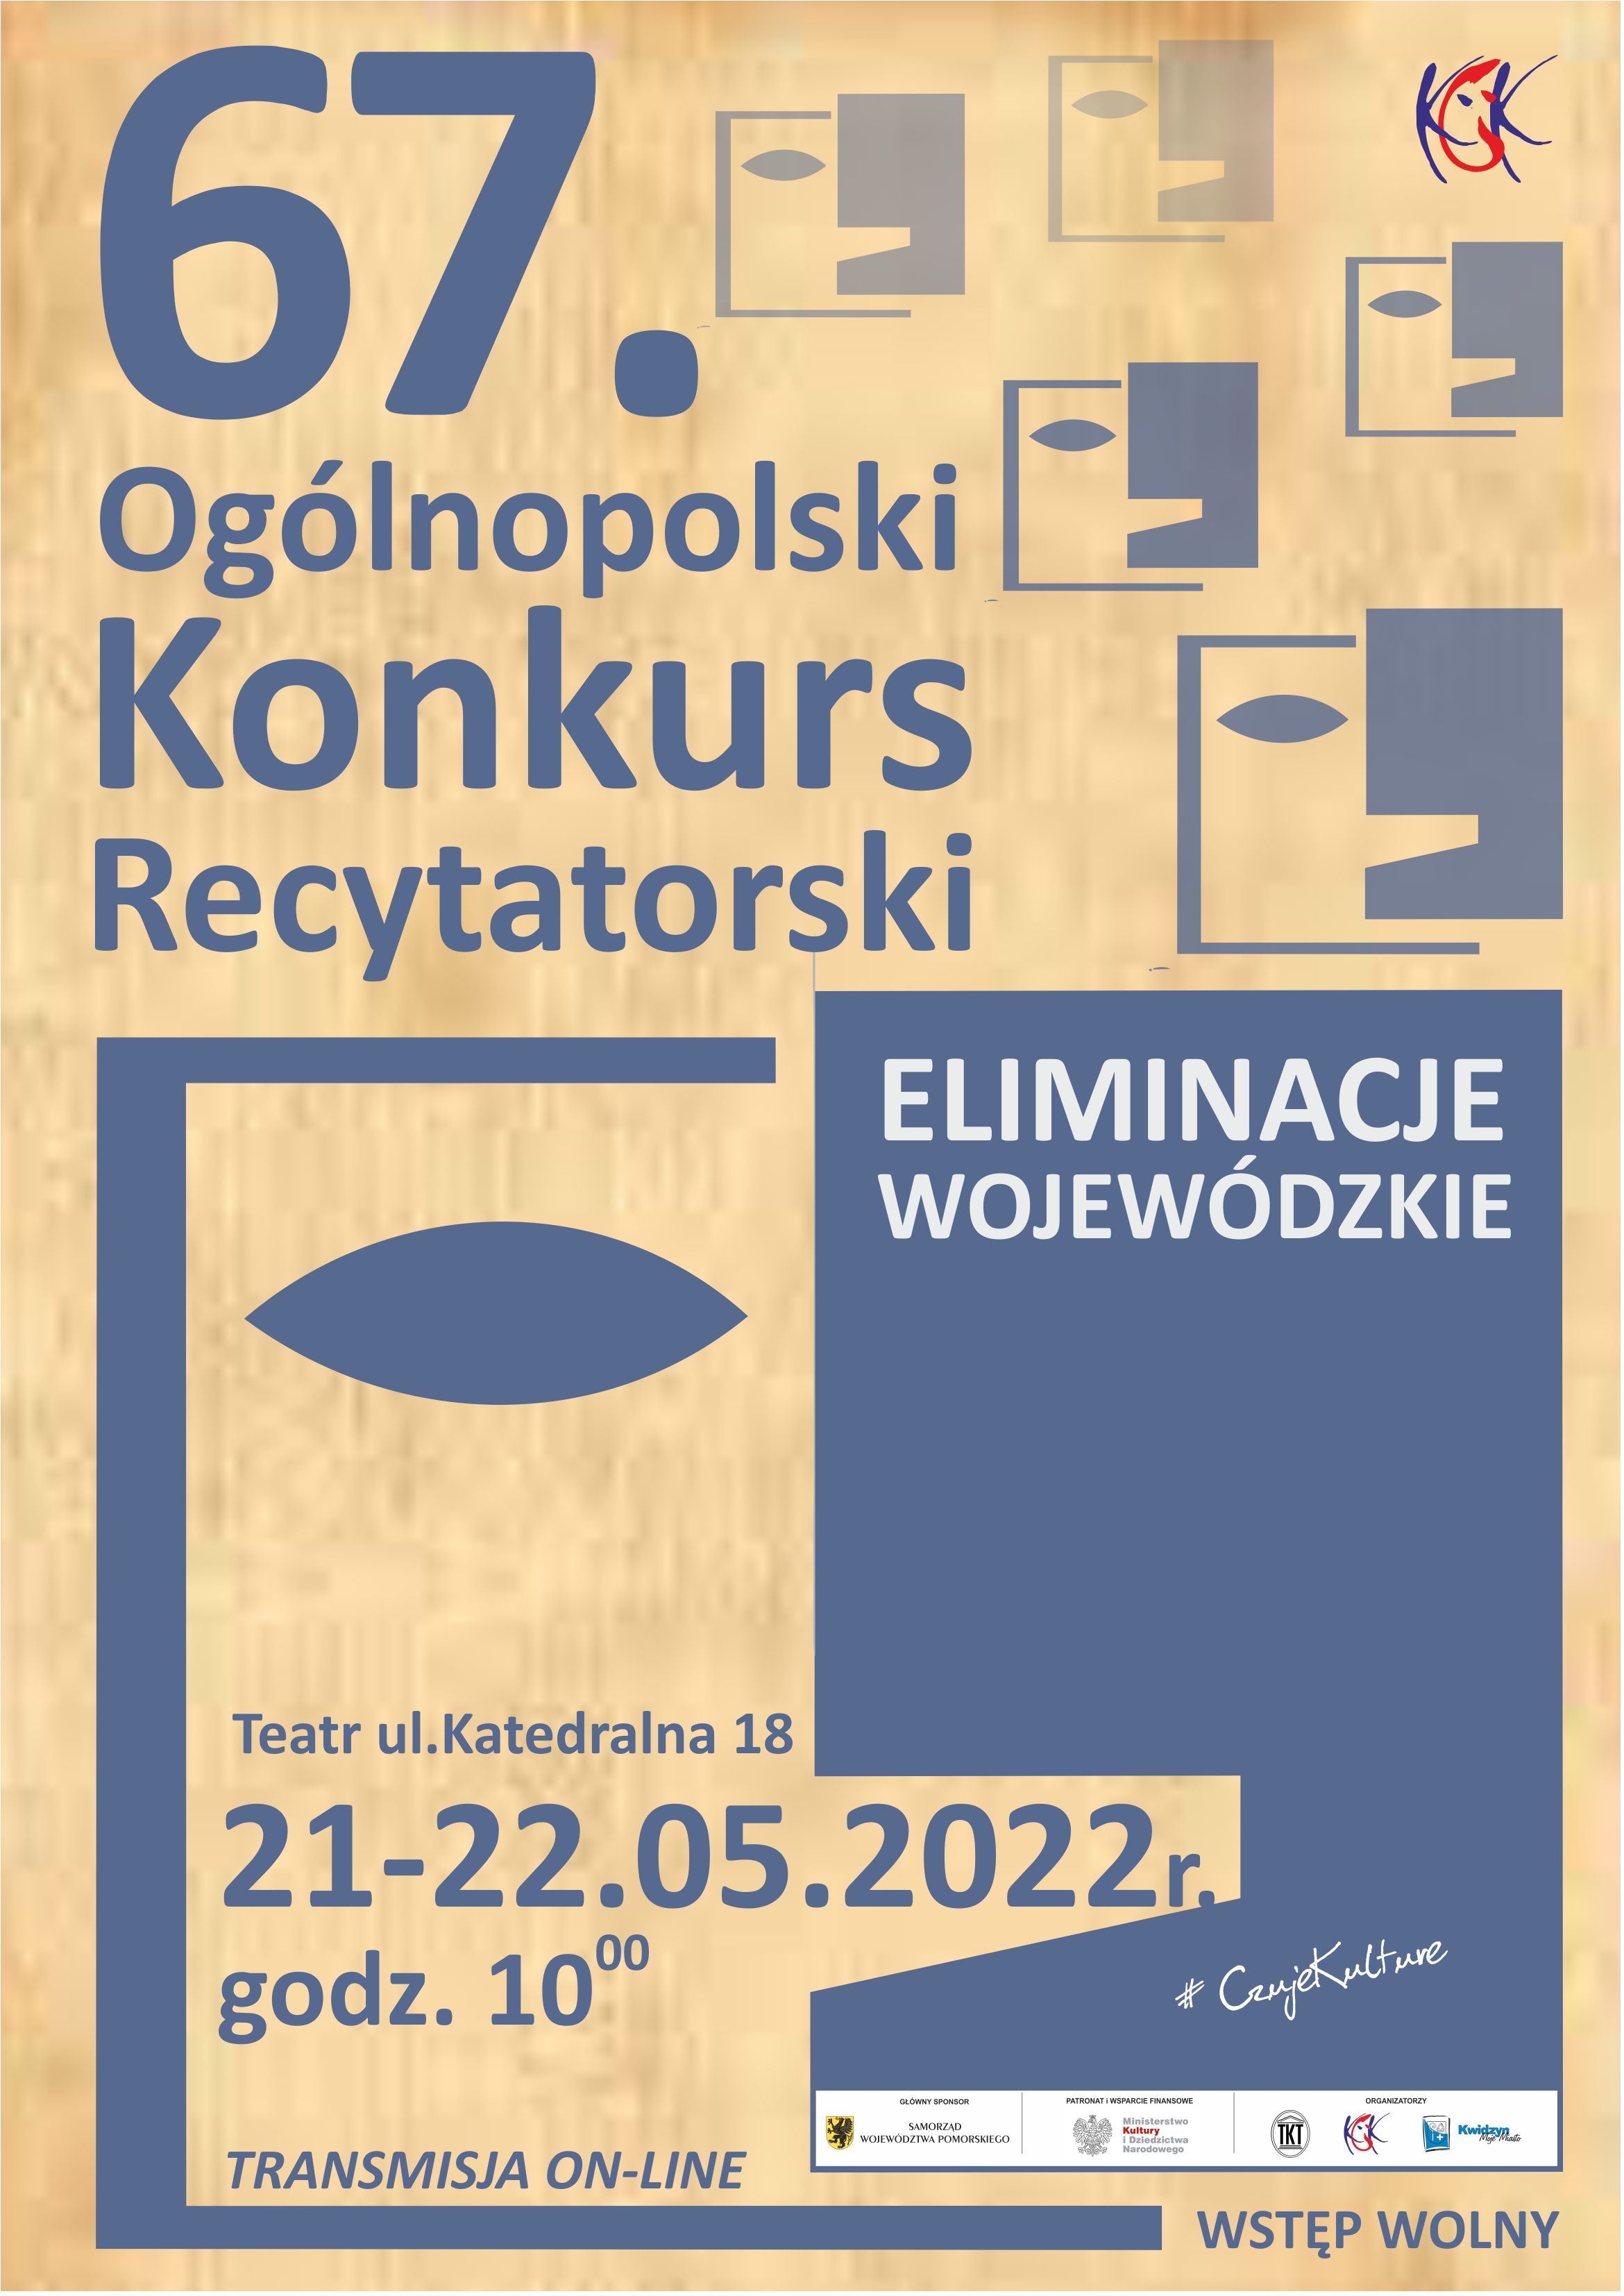 Obraz dla galerii: 21-22.05.2022 67. Ogólnopolski Konkurs Recytatorski